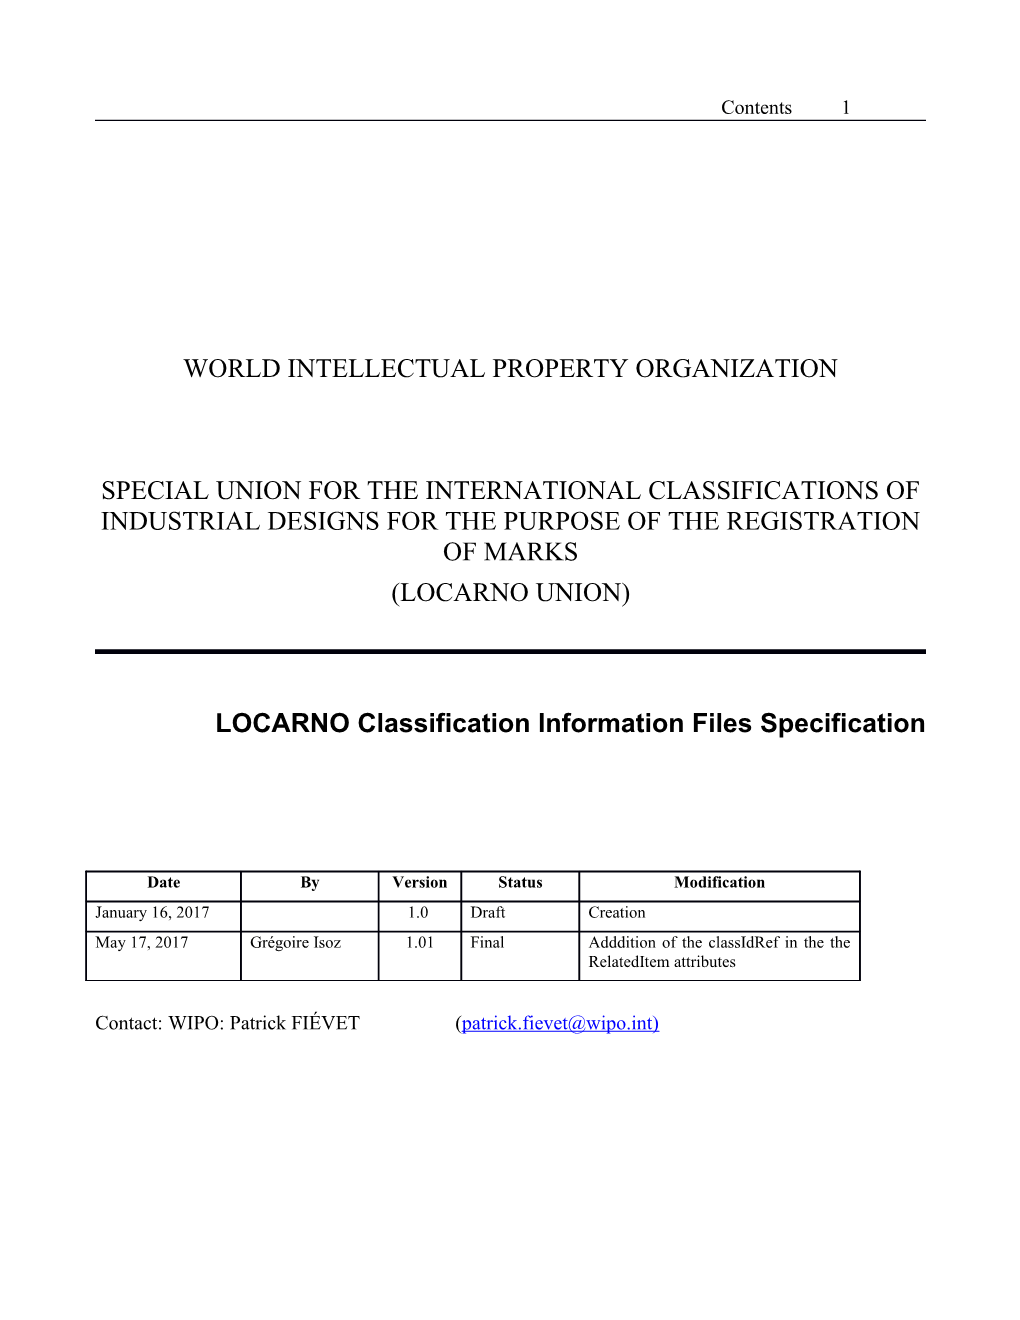 LOCARNO Classification Information Files Specification